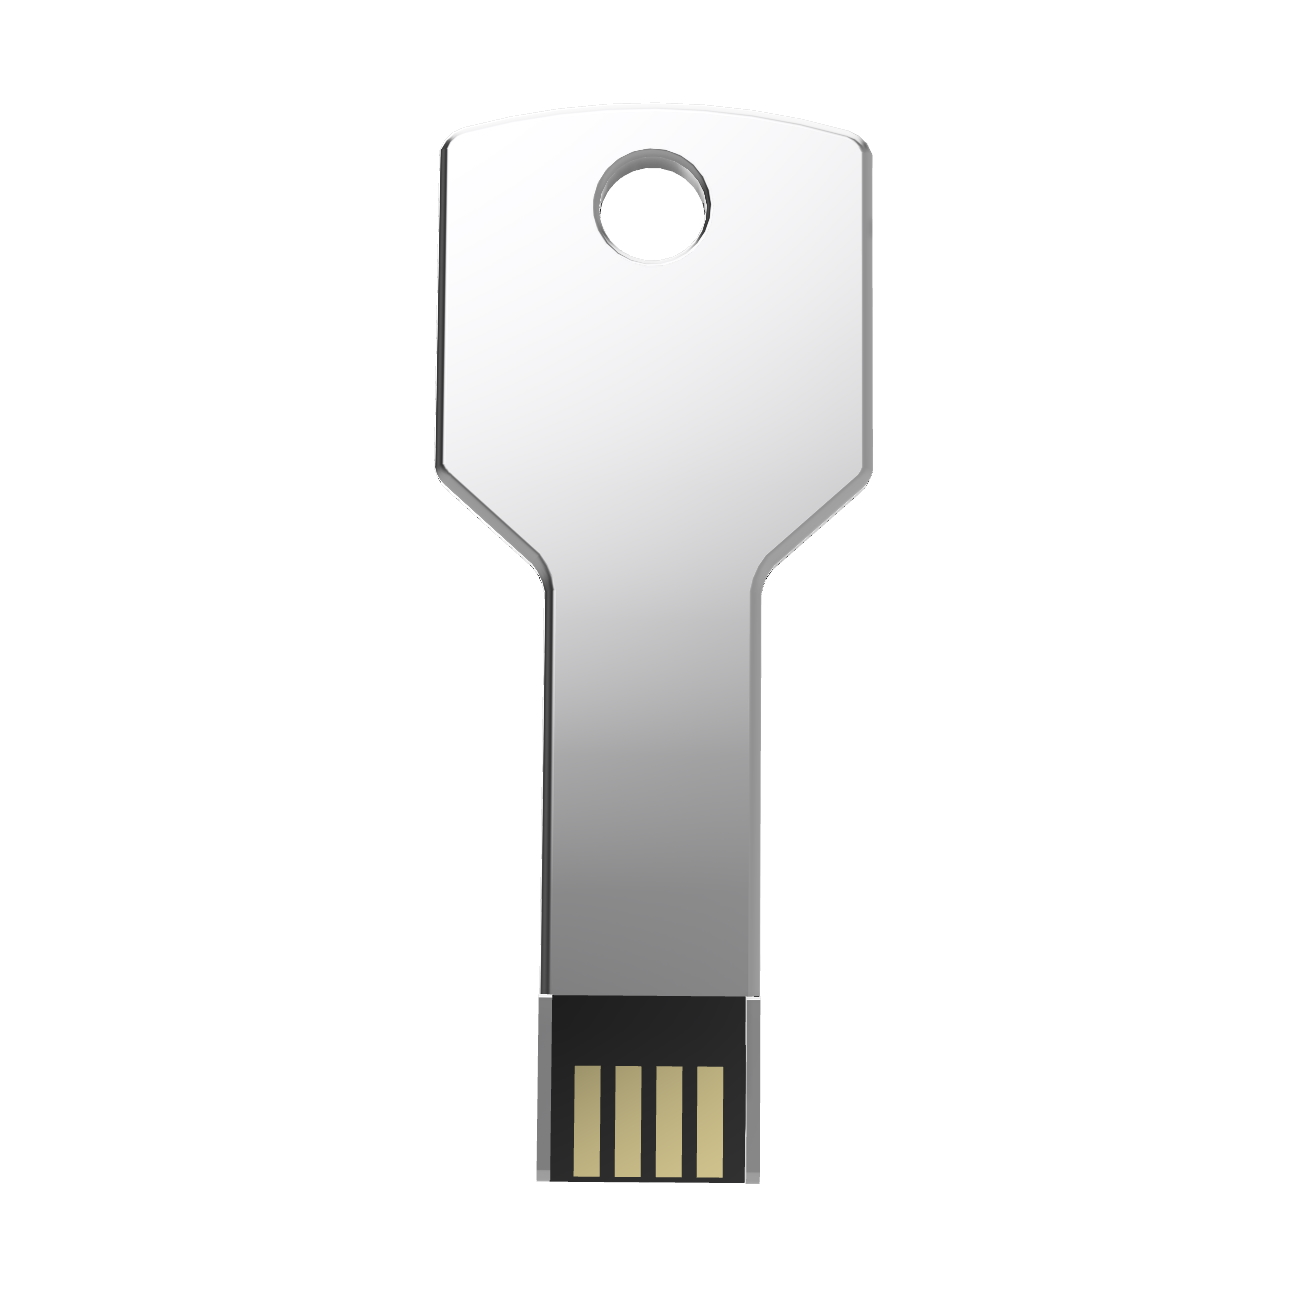 USB GERMANY GB) (silver, USB-Stick Key 4 4GB Silber